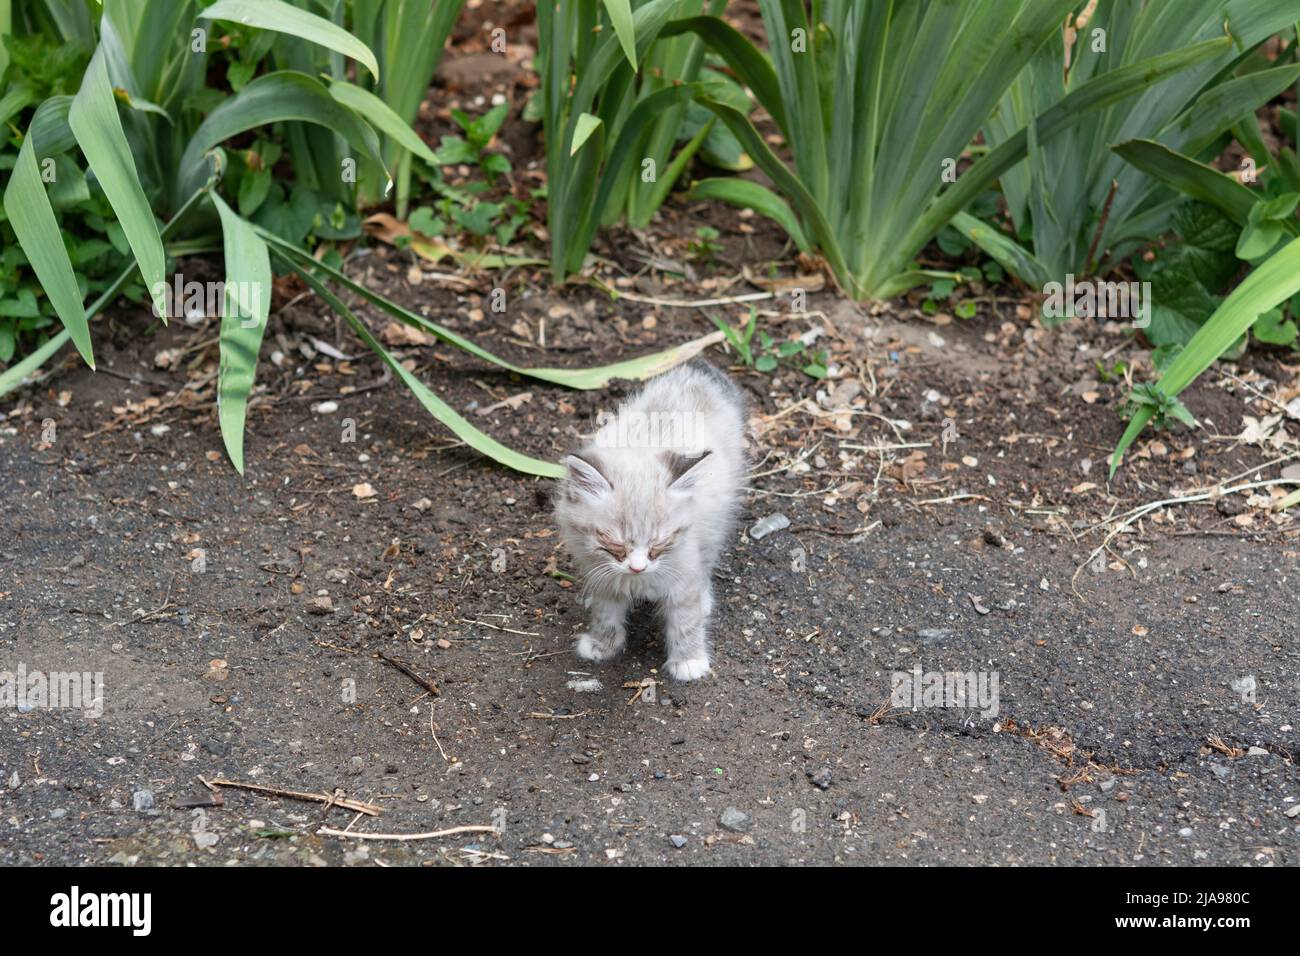 Kitten eye disease. Small gray and white kitten with eye disease. Kitten sits on the ground among the green grass Stock Photo